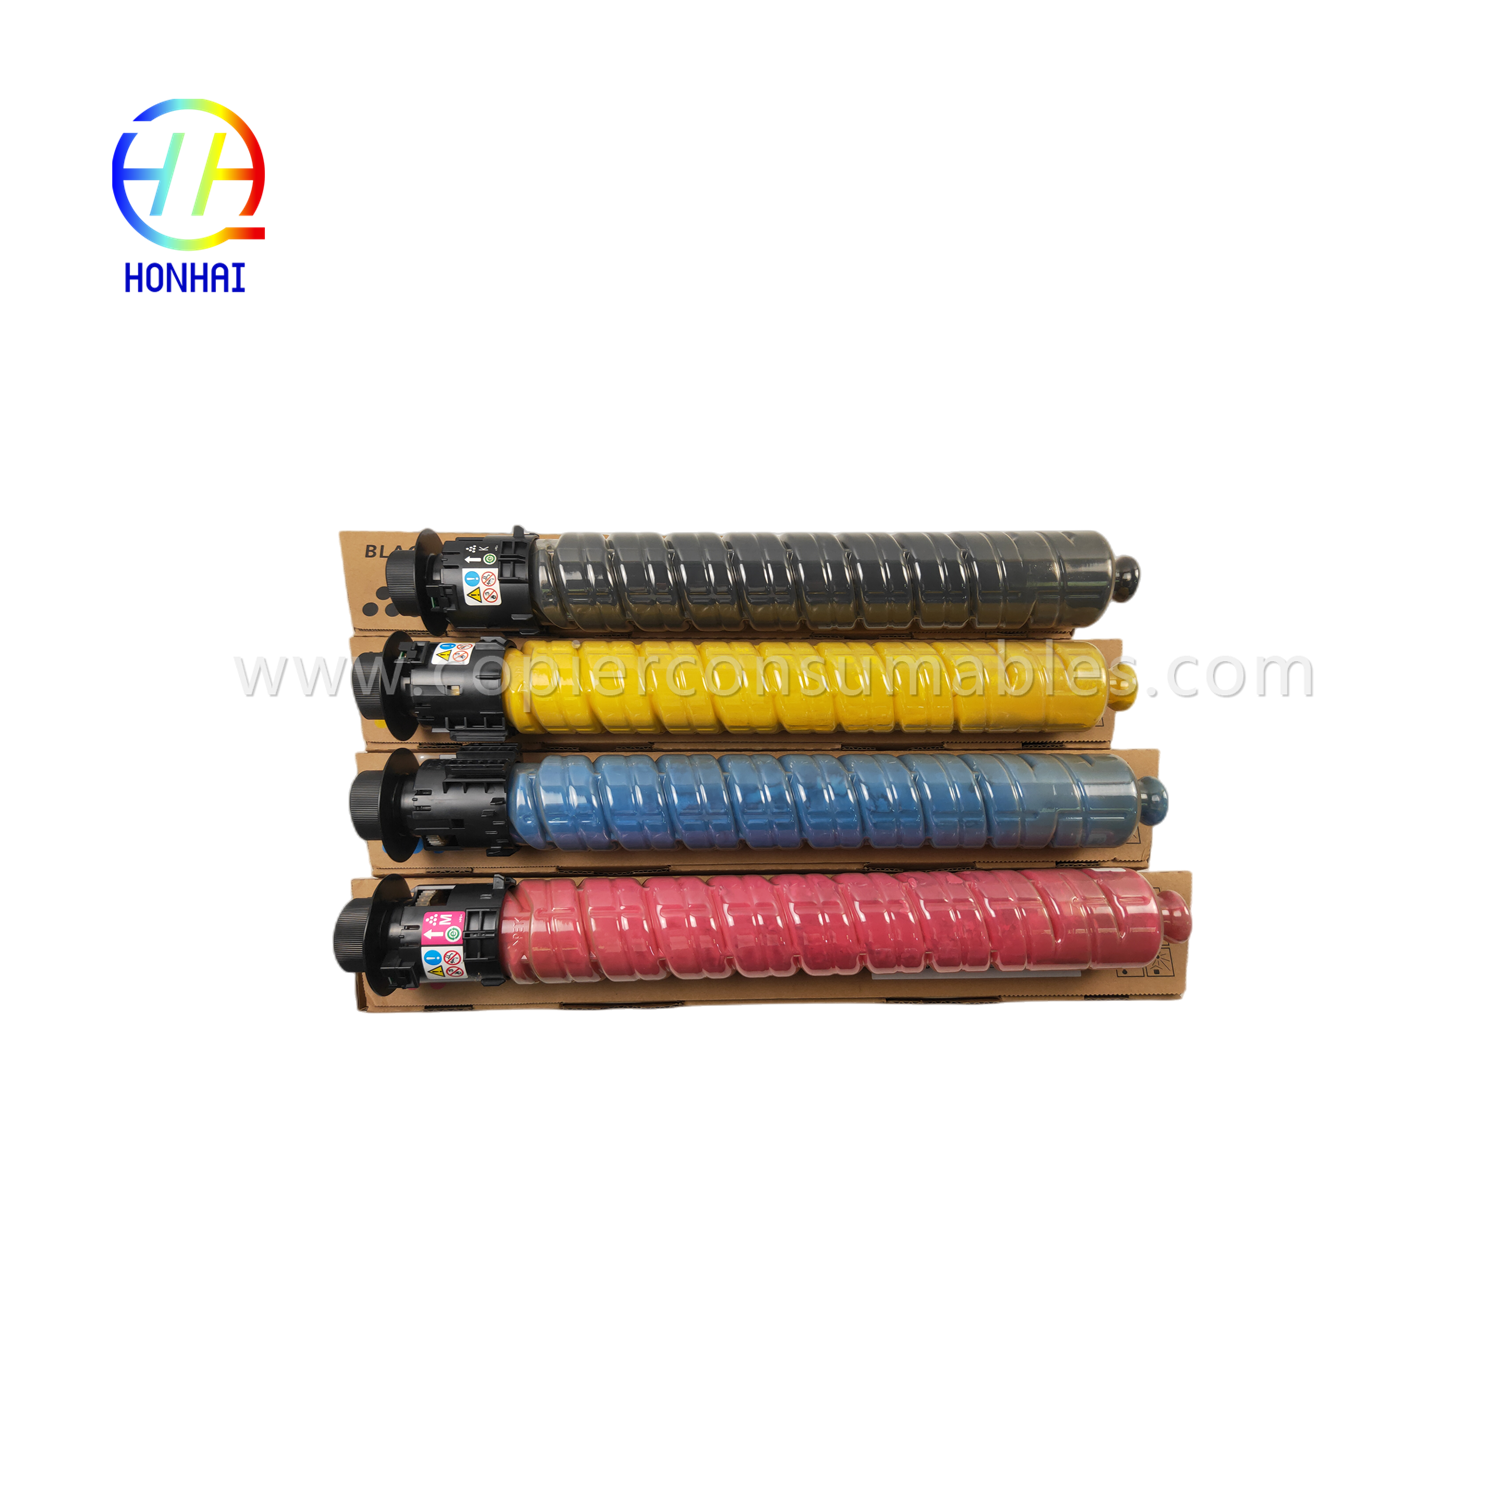 Toner Cartridge Set for Ricoh MPC3003 MPC3004 MPC3503 MPC3504 841813 841814 841815 841816